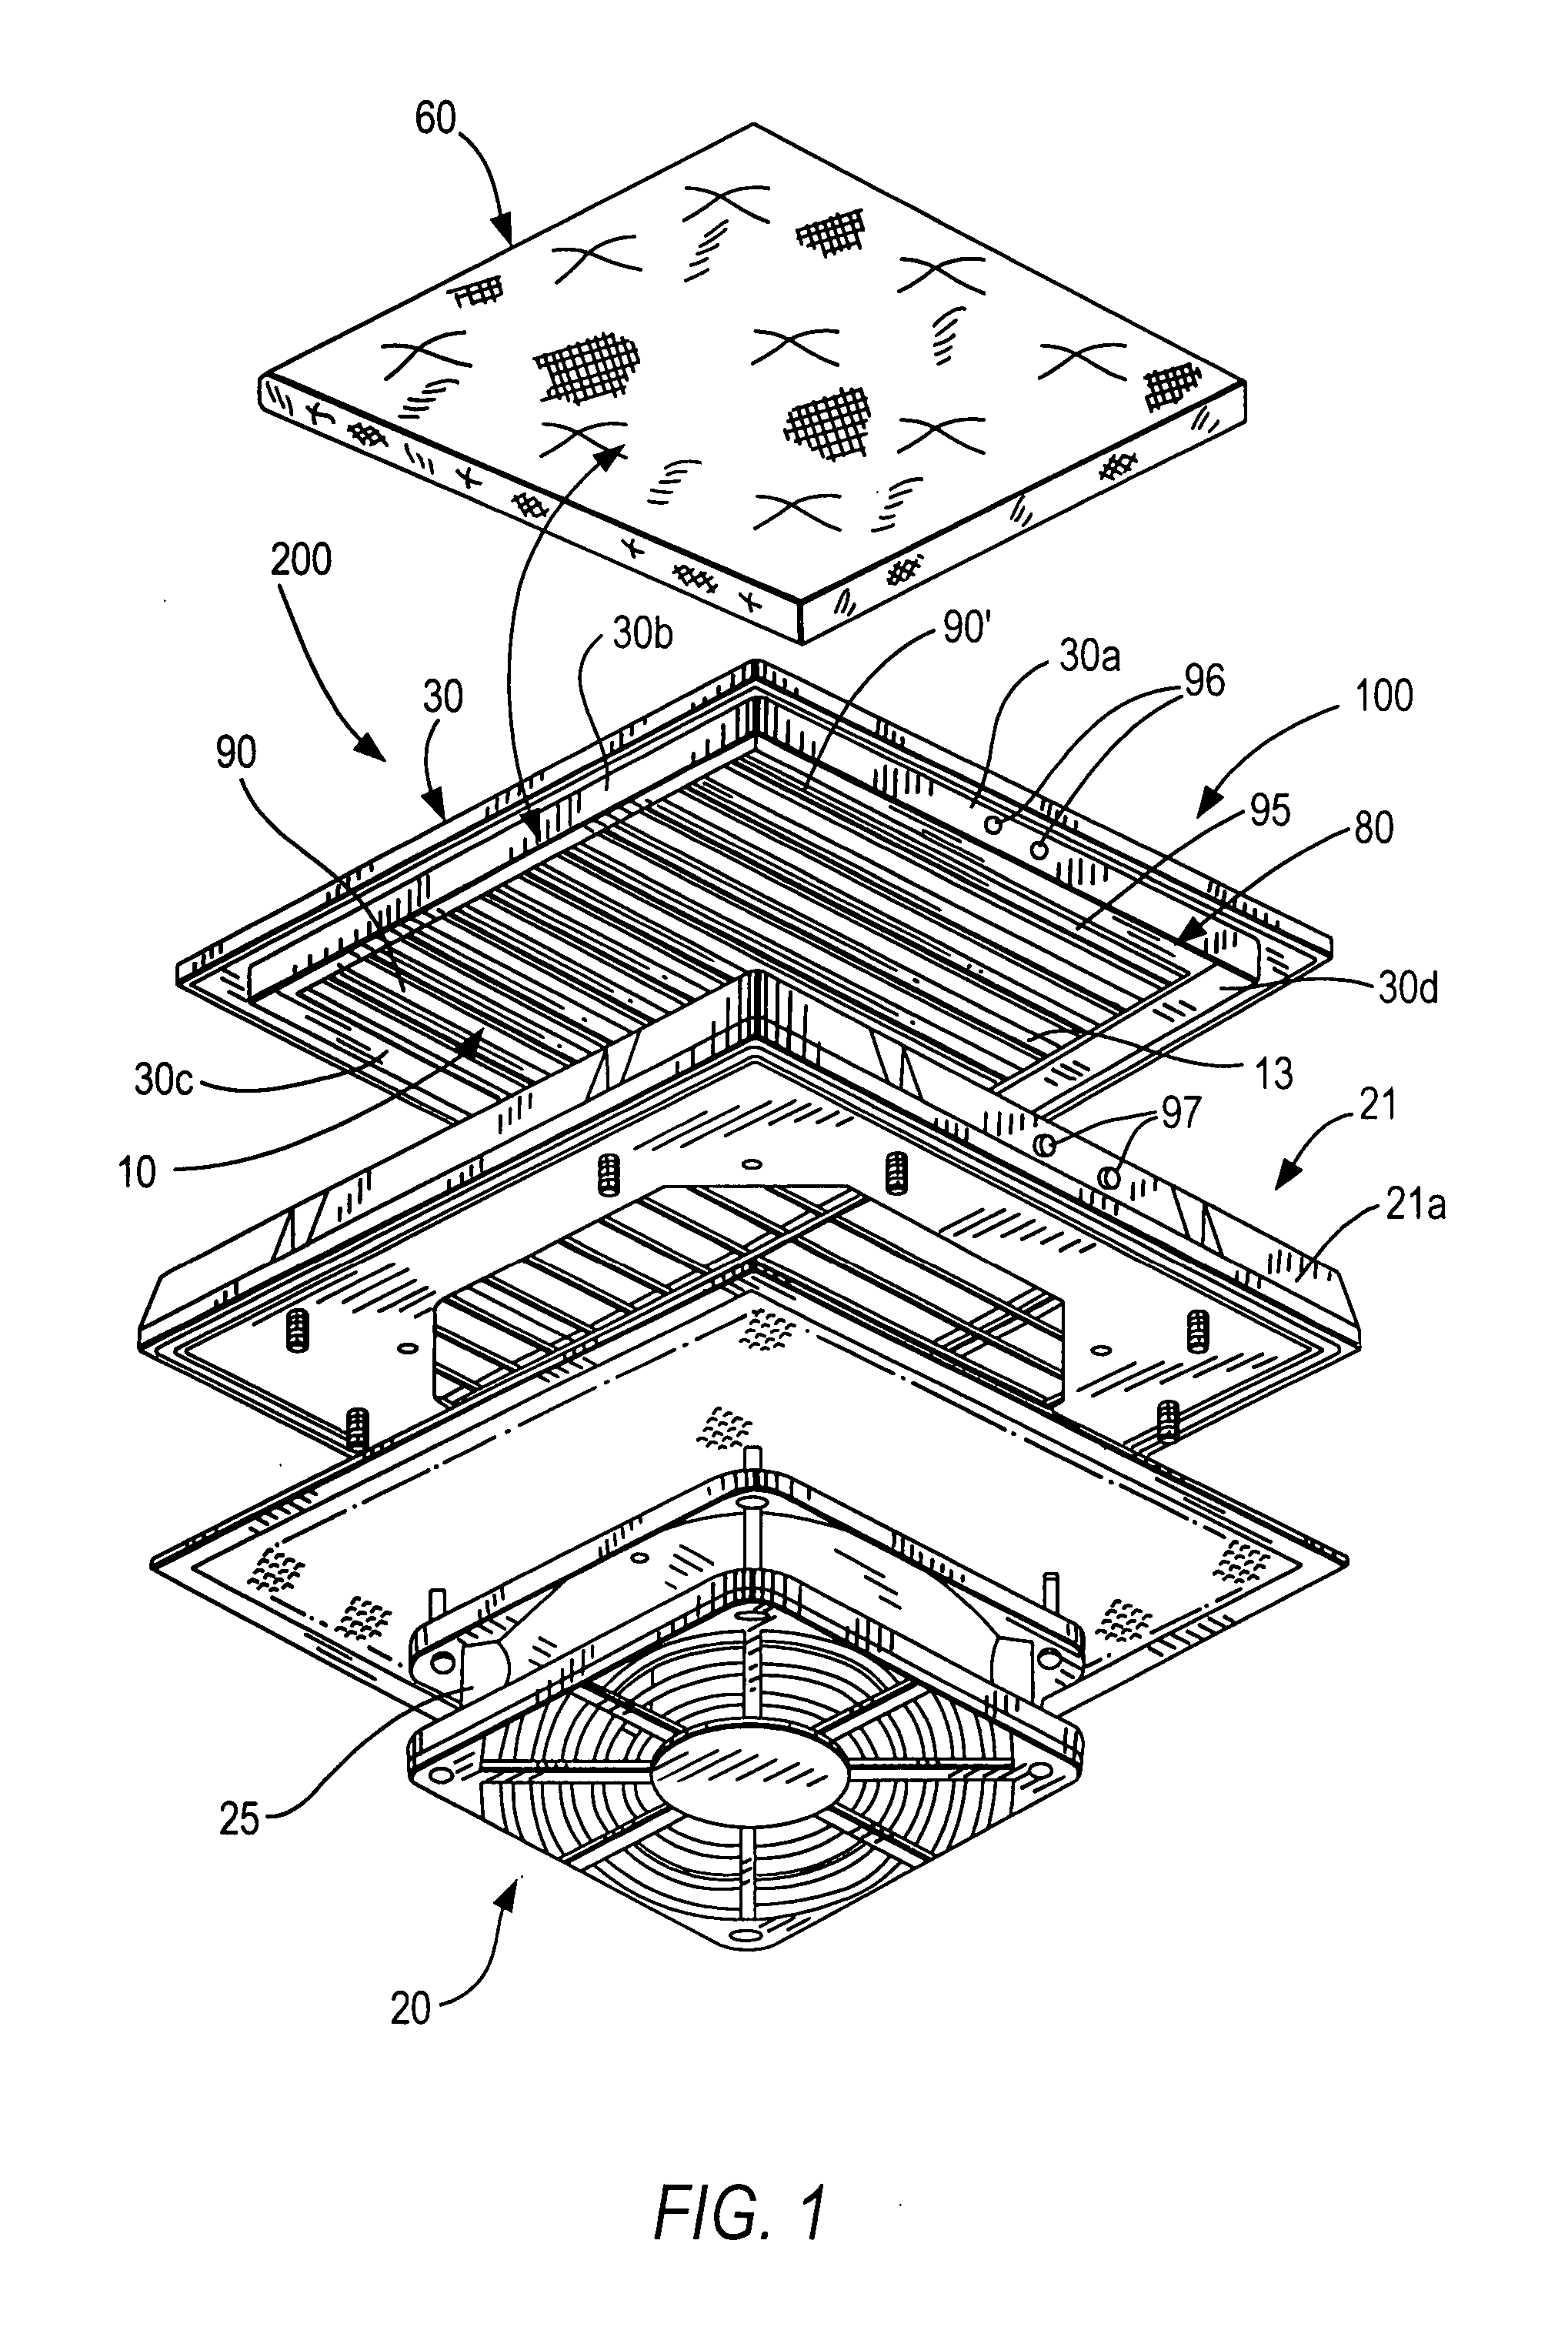 Air passage device